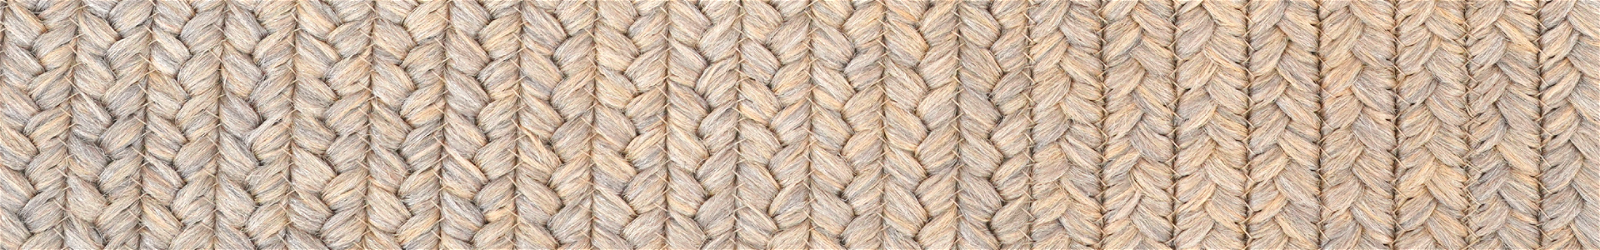 Polypropylene - Outdoor-Indoor - Brown Braided Rugs